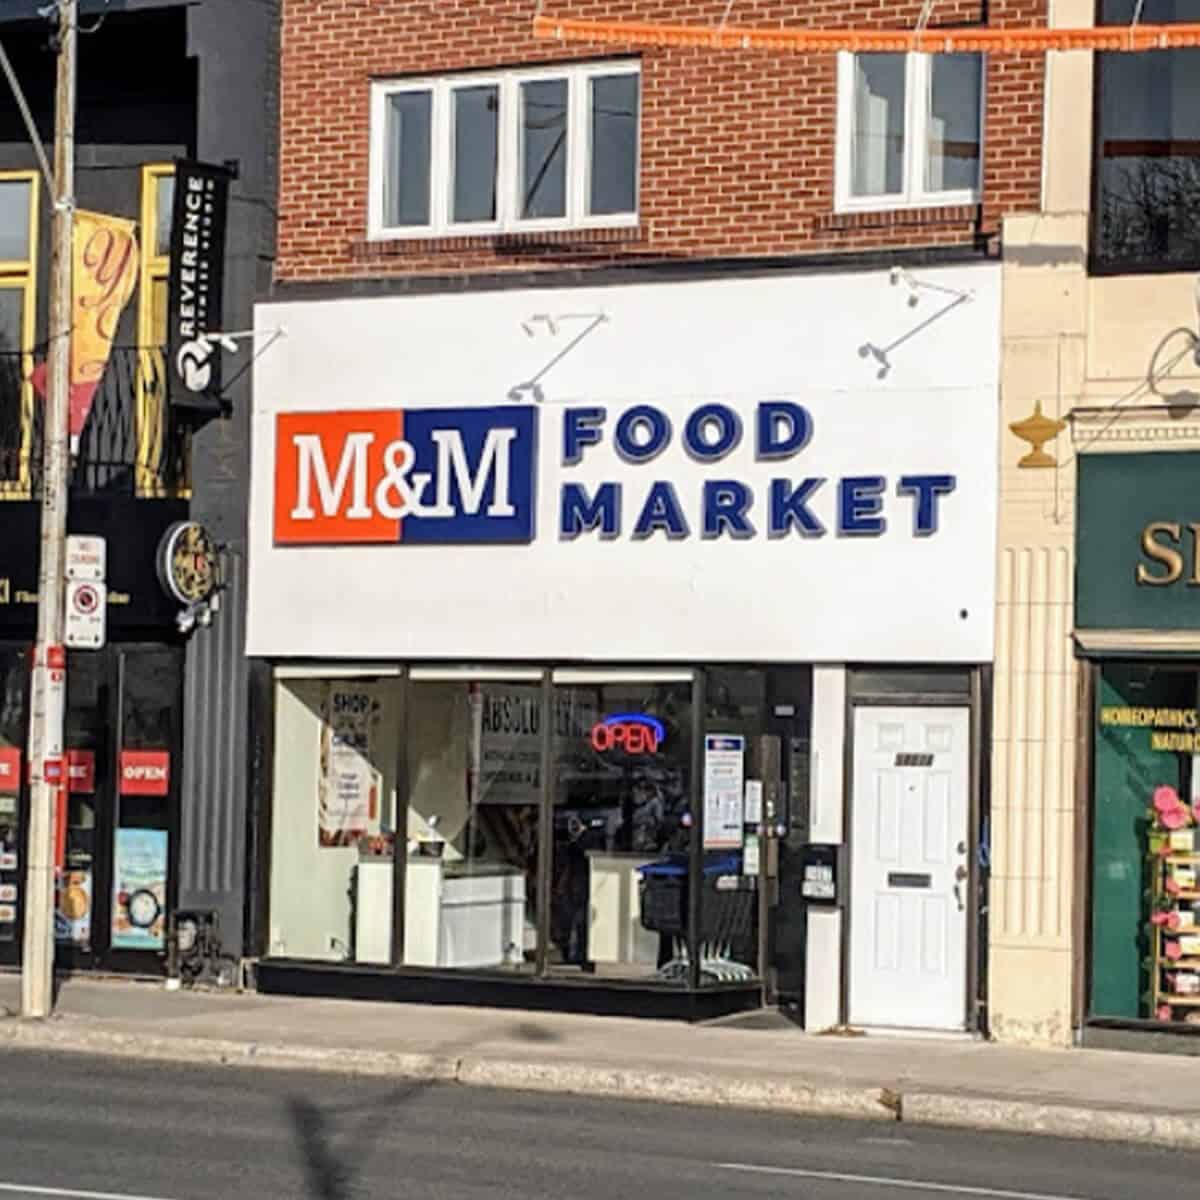 M&M Food Market Toronto : Locations, Hours & More